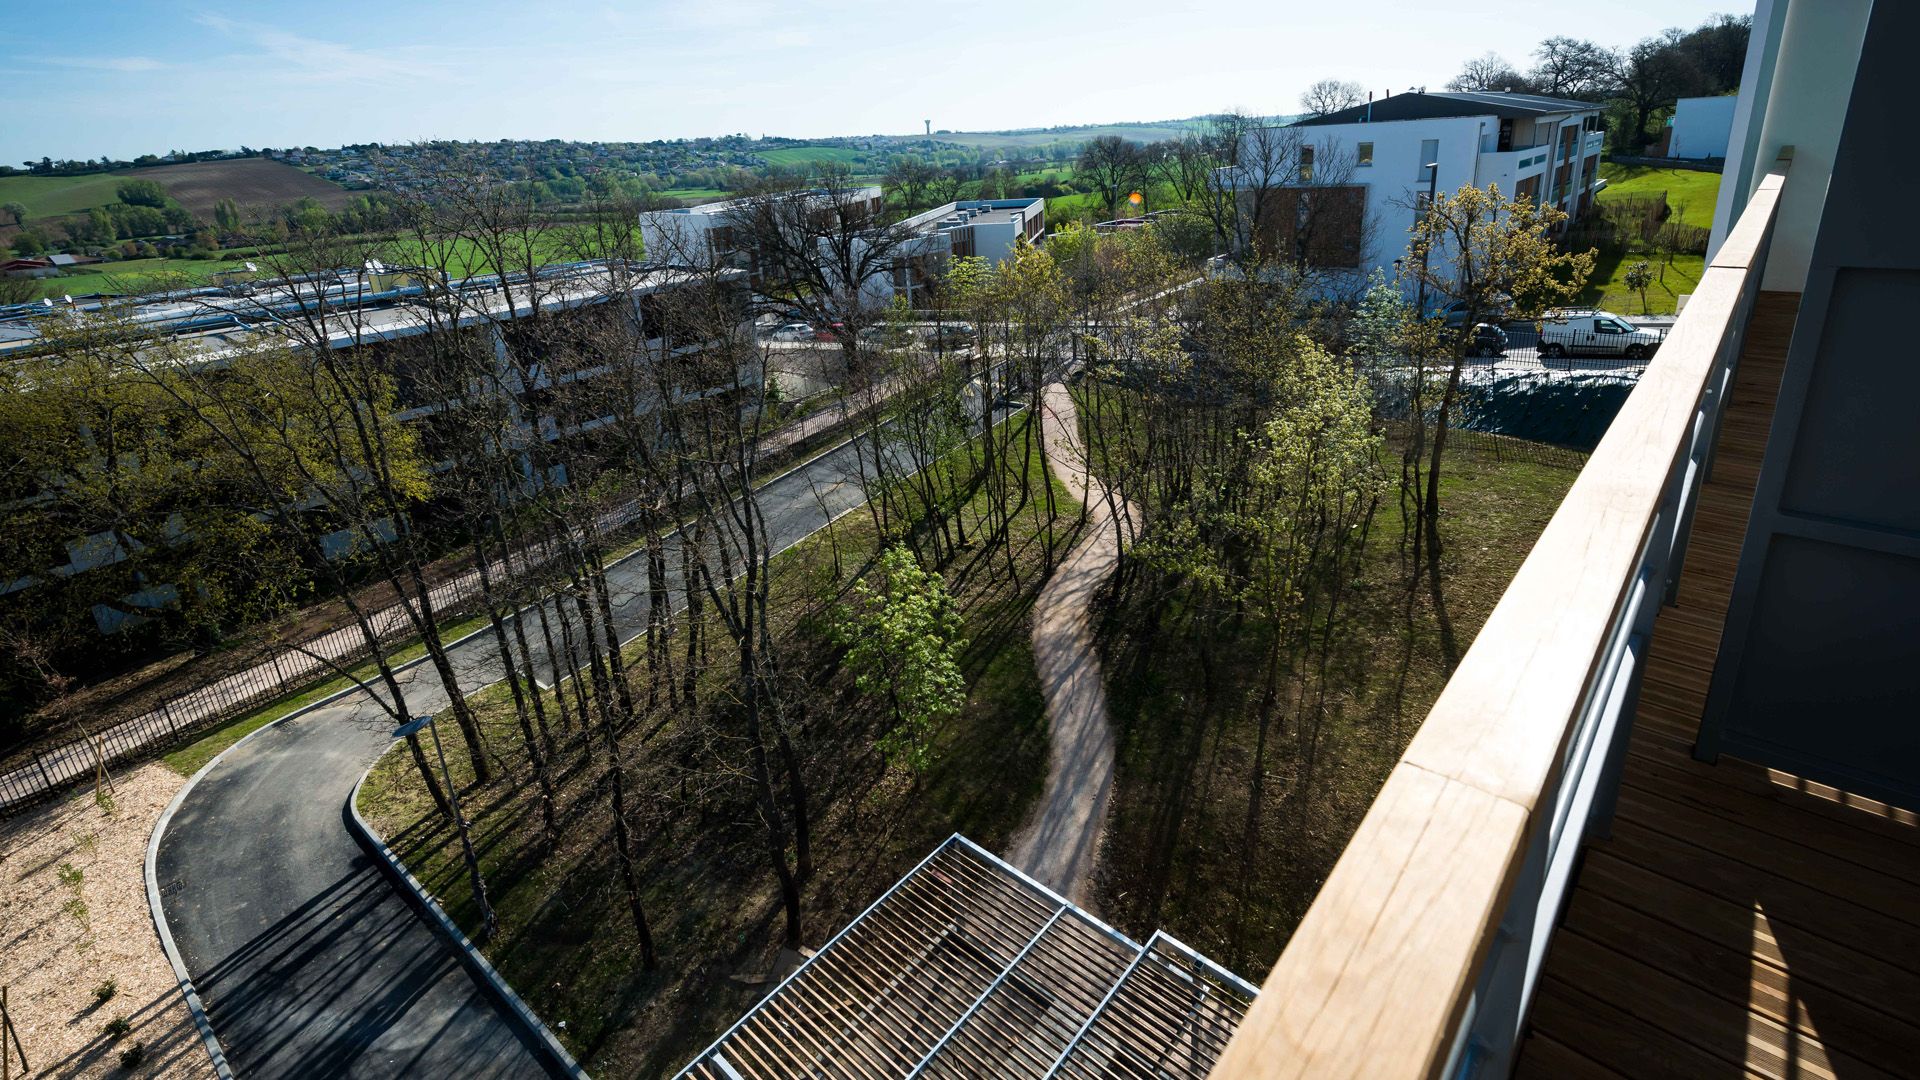 Seuil-architecture-residence-senior-vue-balcon-slid